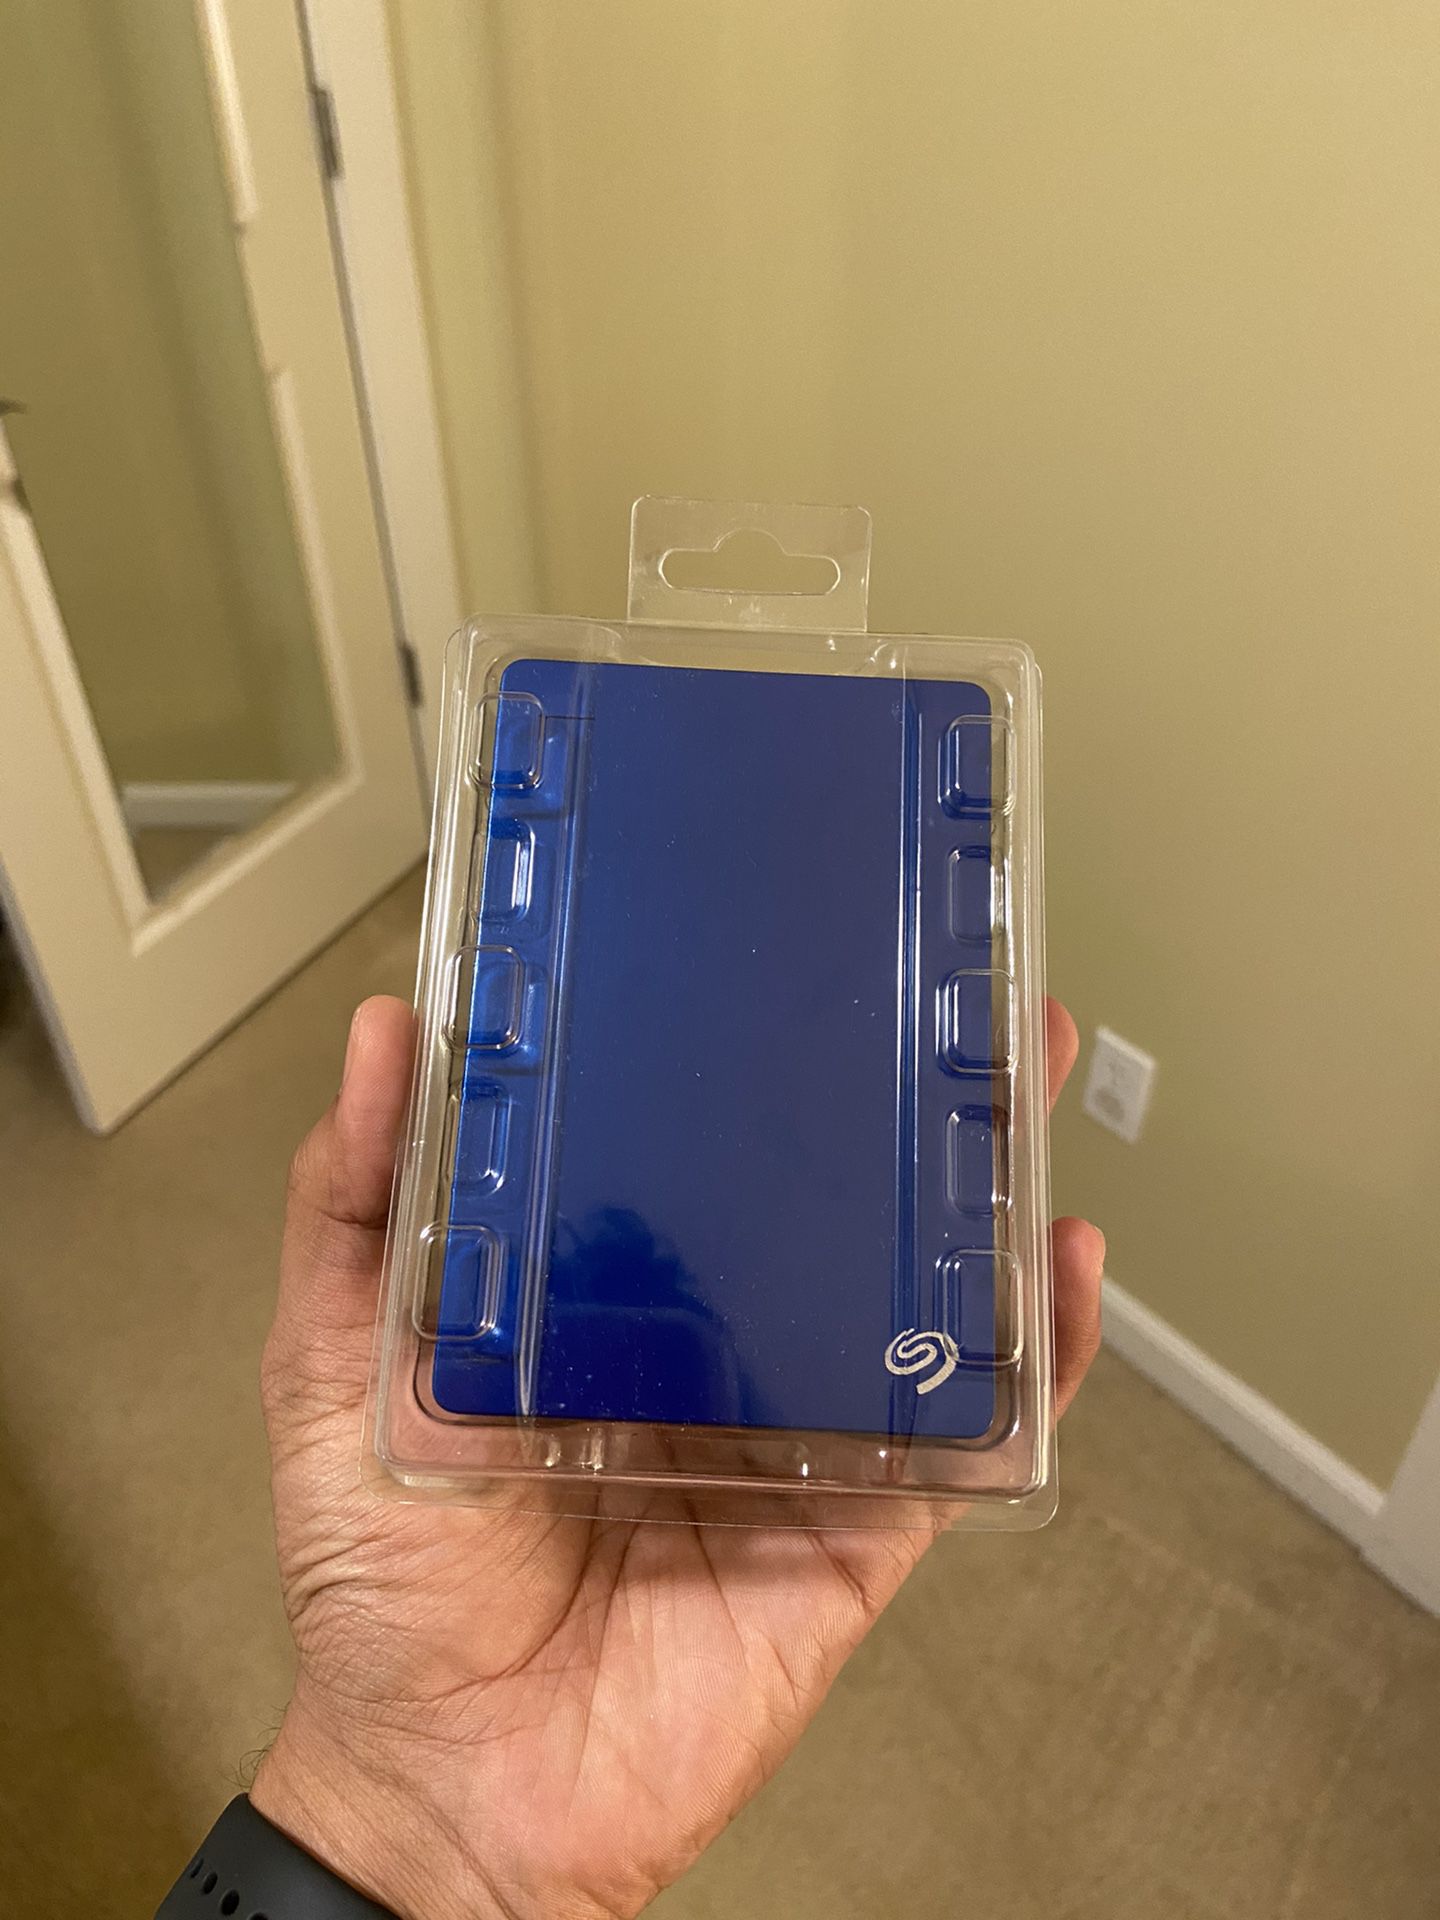 NEW Seagate Backup Plus 5TB Portable Hard Drive - Blue